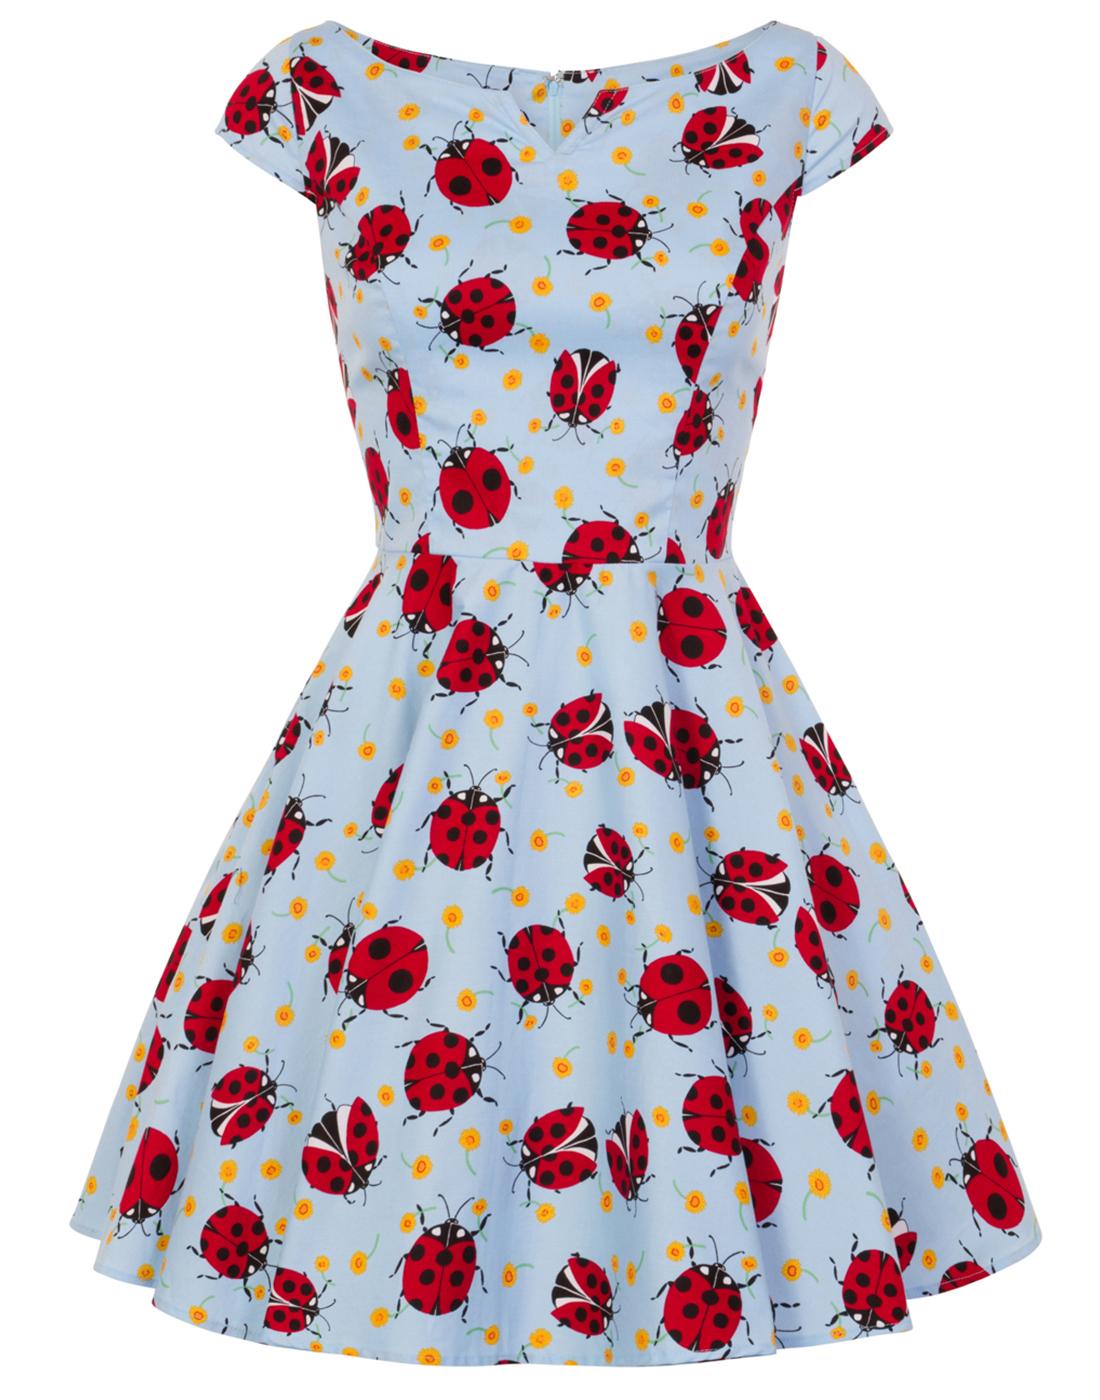 Lila HELL BUNNY Retro 60s Ladybird Mod Mini Dress